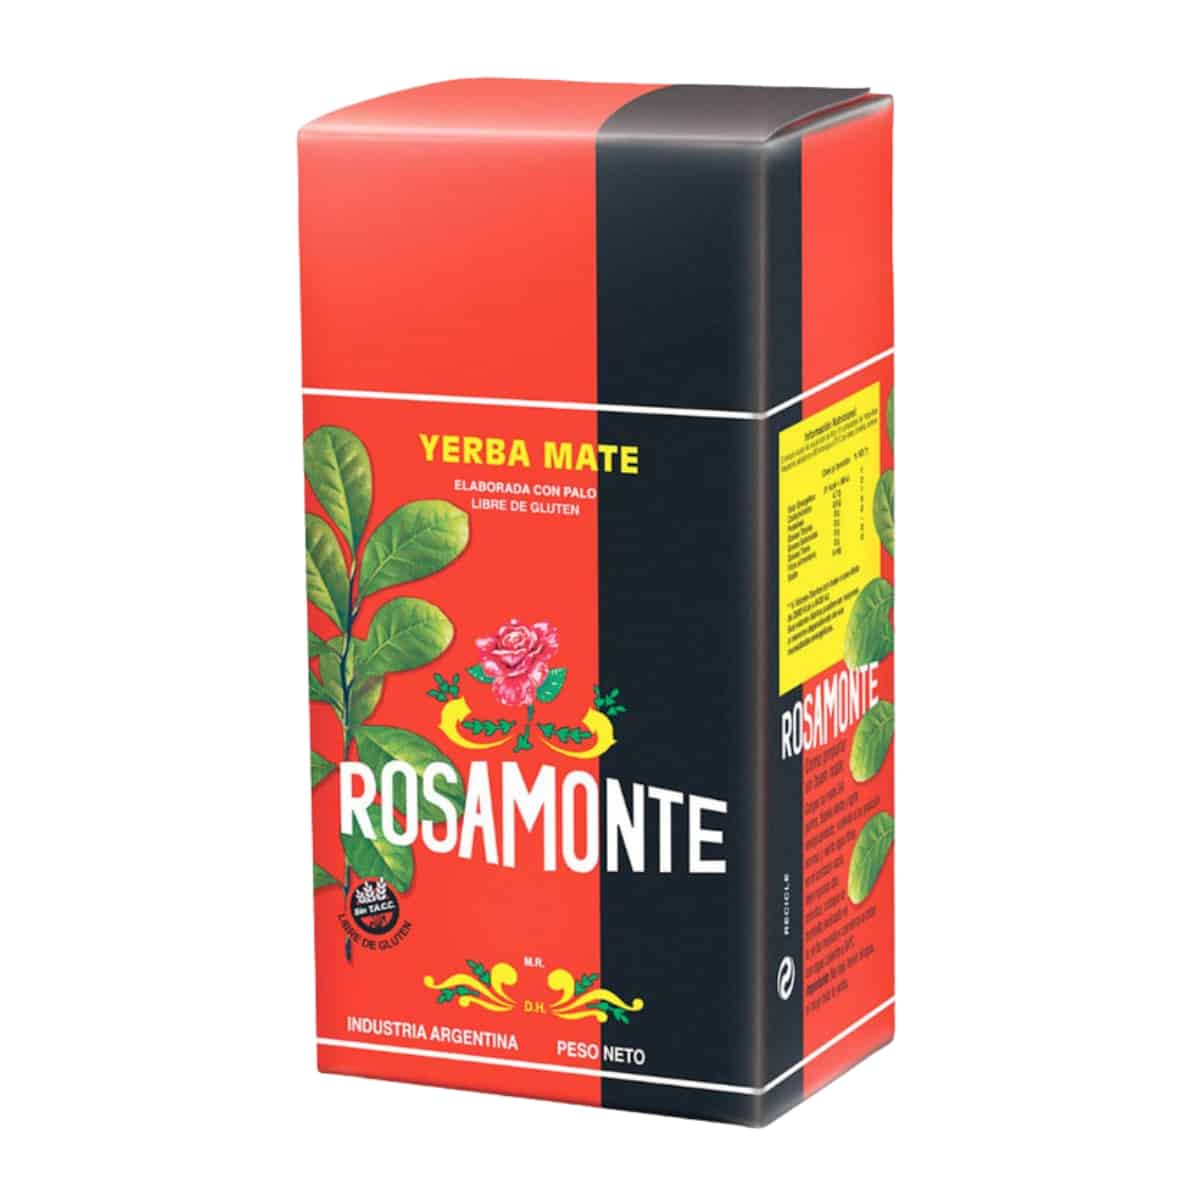 Buy Rosamonte Yerba Mate Tea - 1 kg